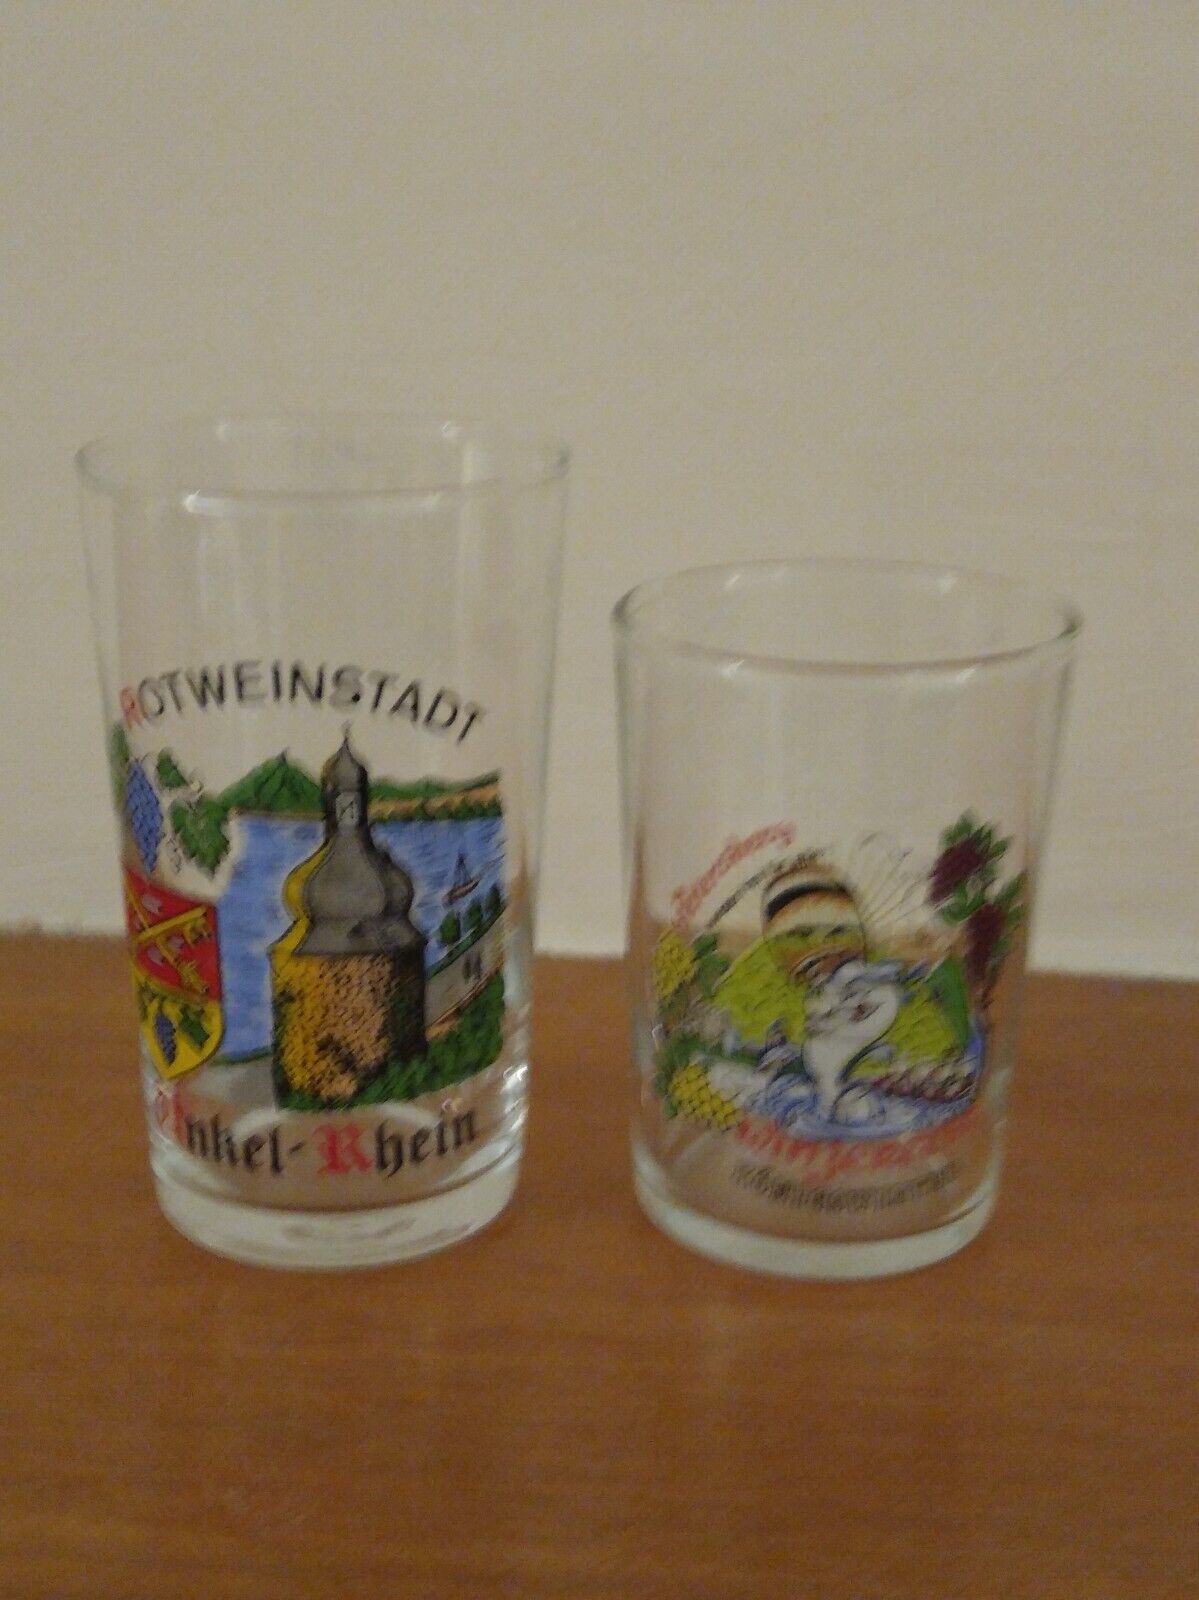 2 Vintage German Wine Festival Shot glasses from Konigswinter and Rotweinstadt